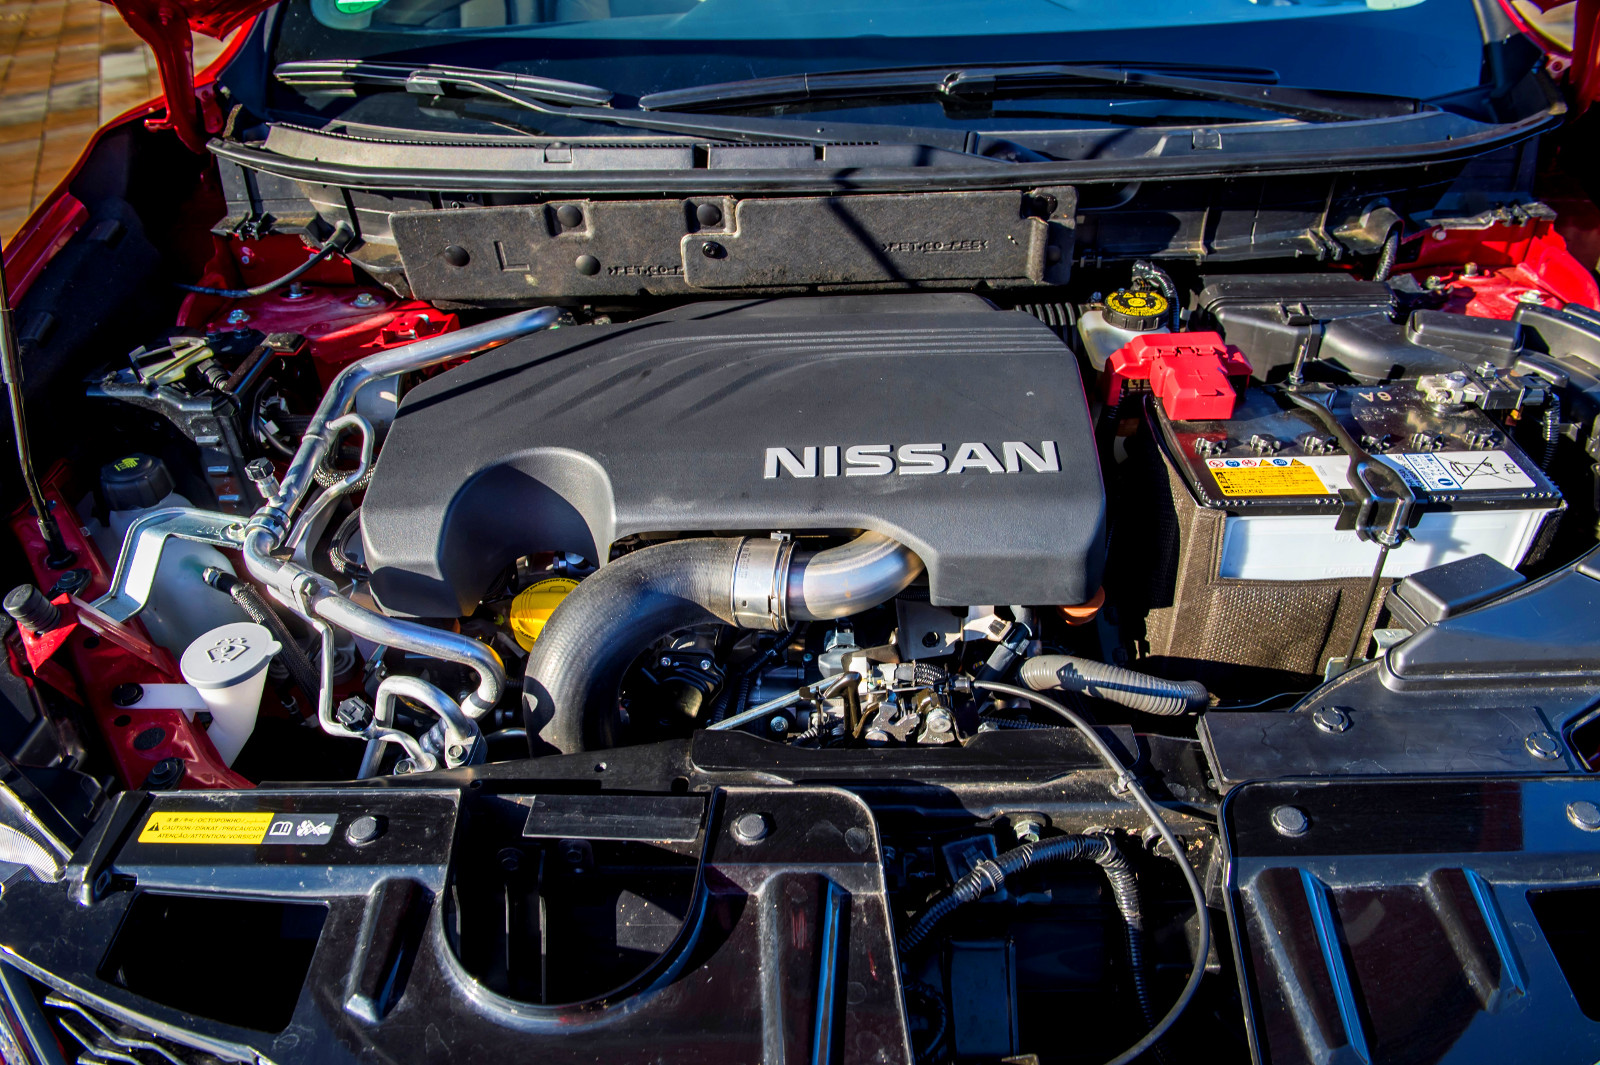 Nissan X-Trail 2.0-litre diesel